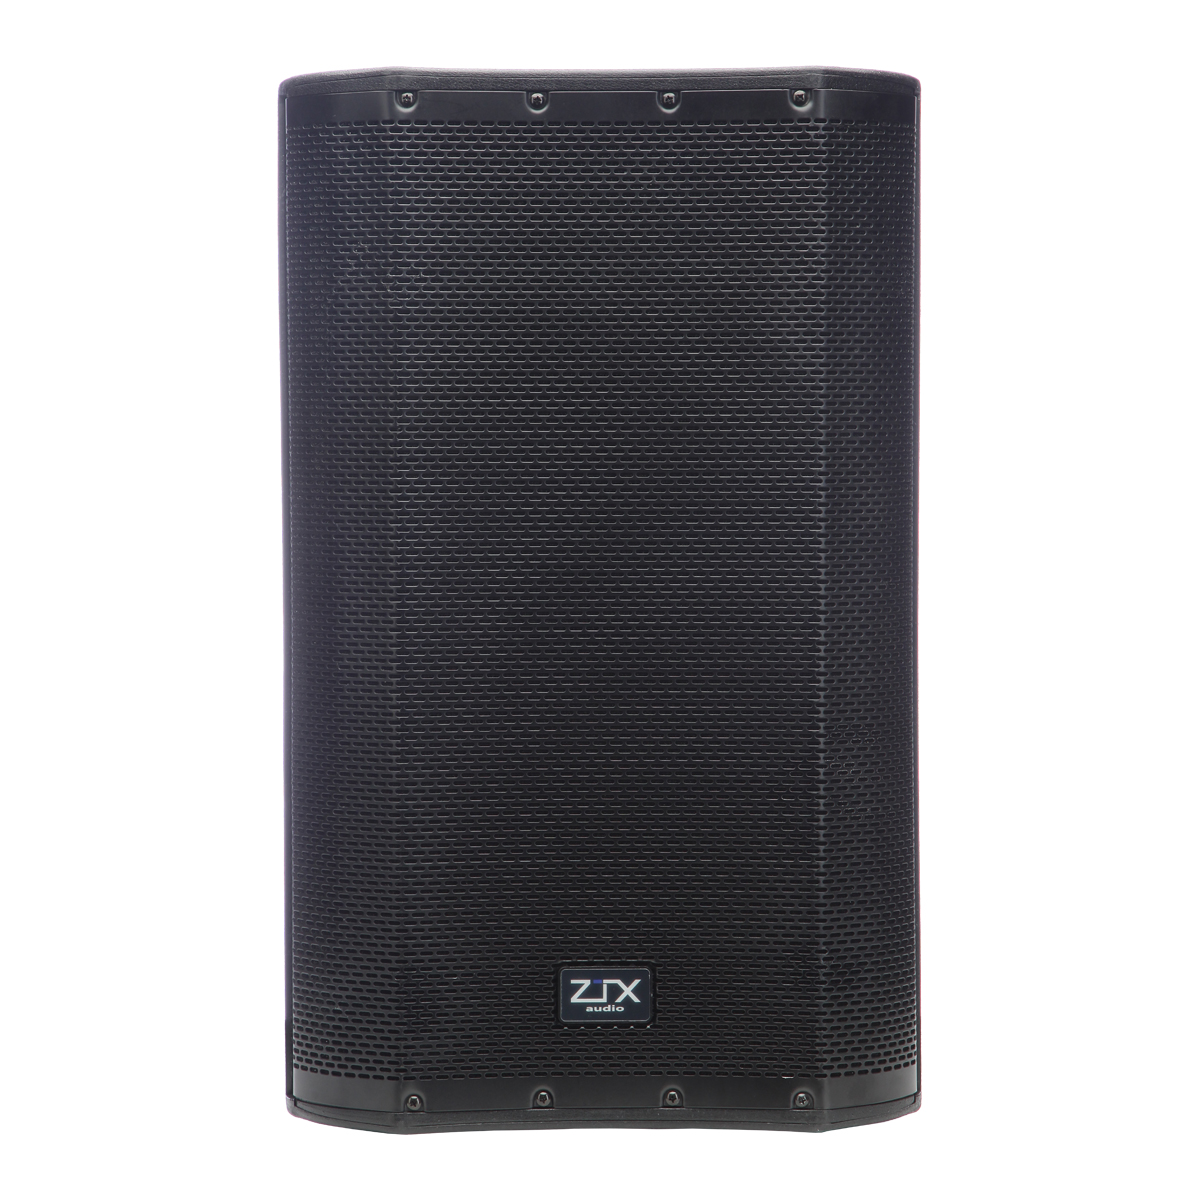 ZTX audio TX-115